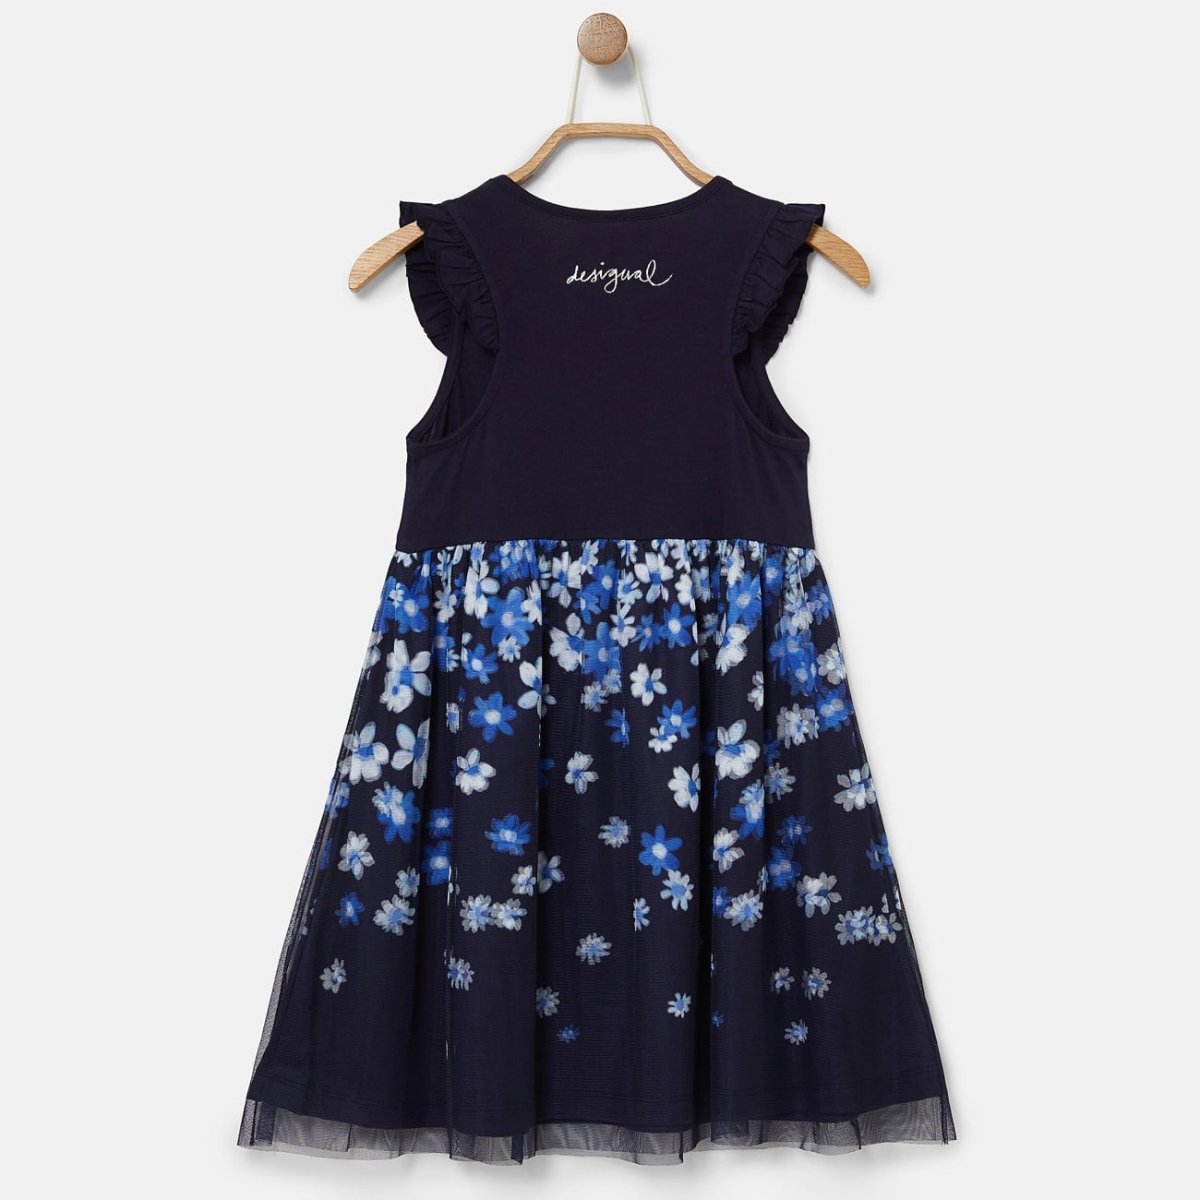 Vestito con fiori - DESIGUAL bambina - Taxi Bleu Moda Donna -